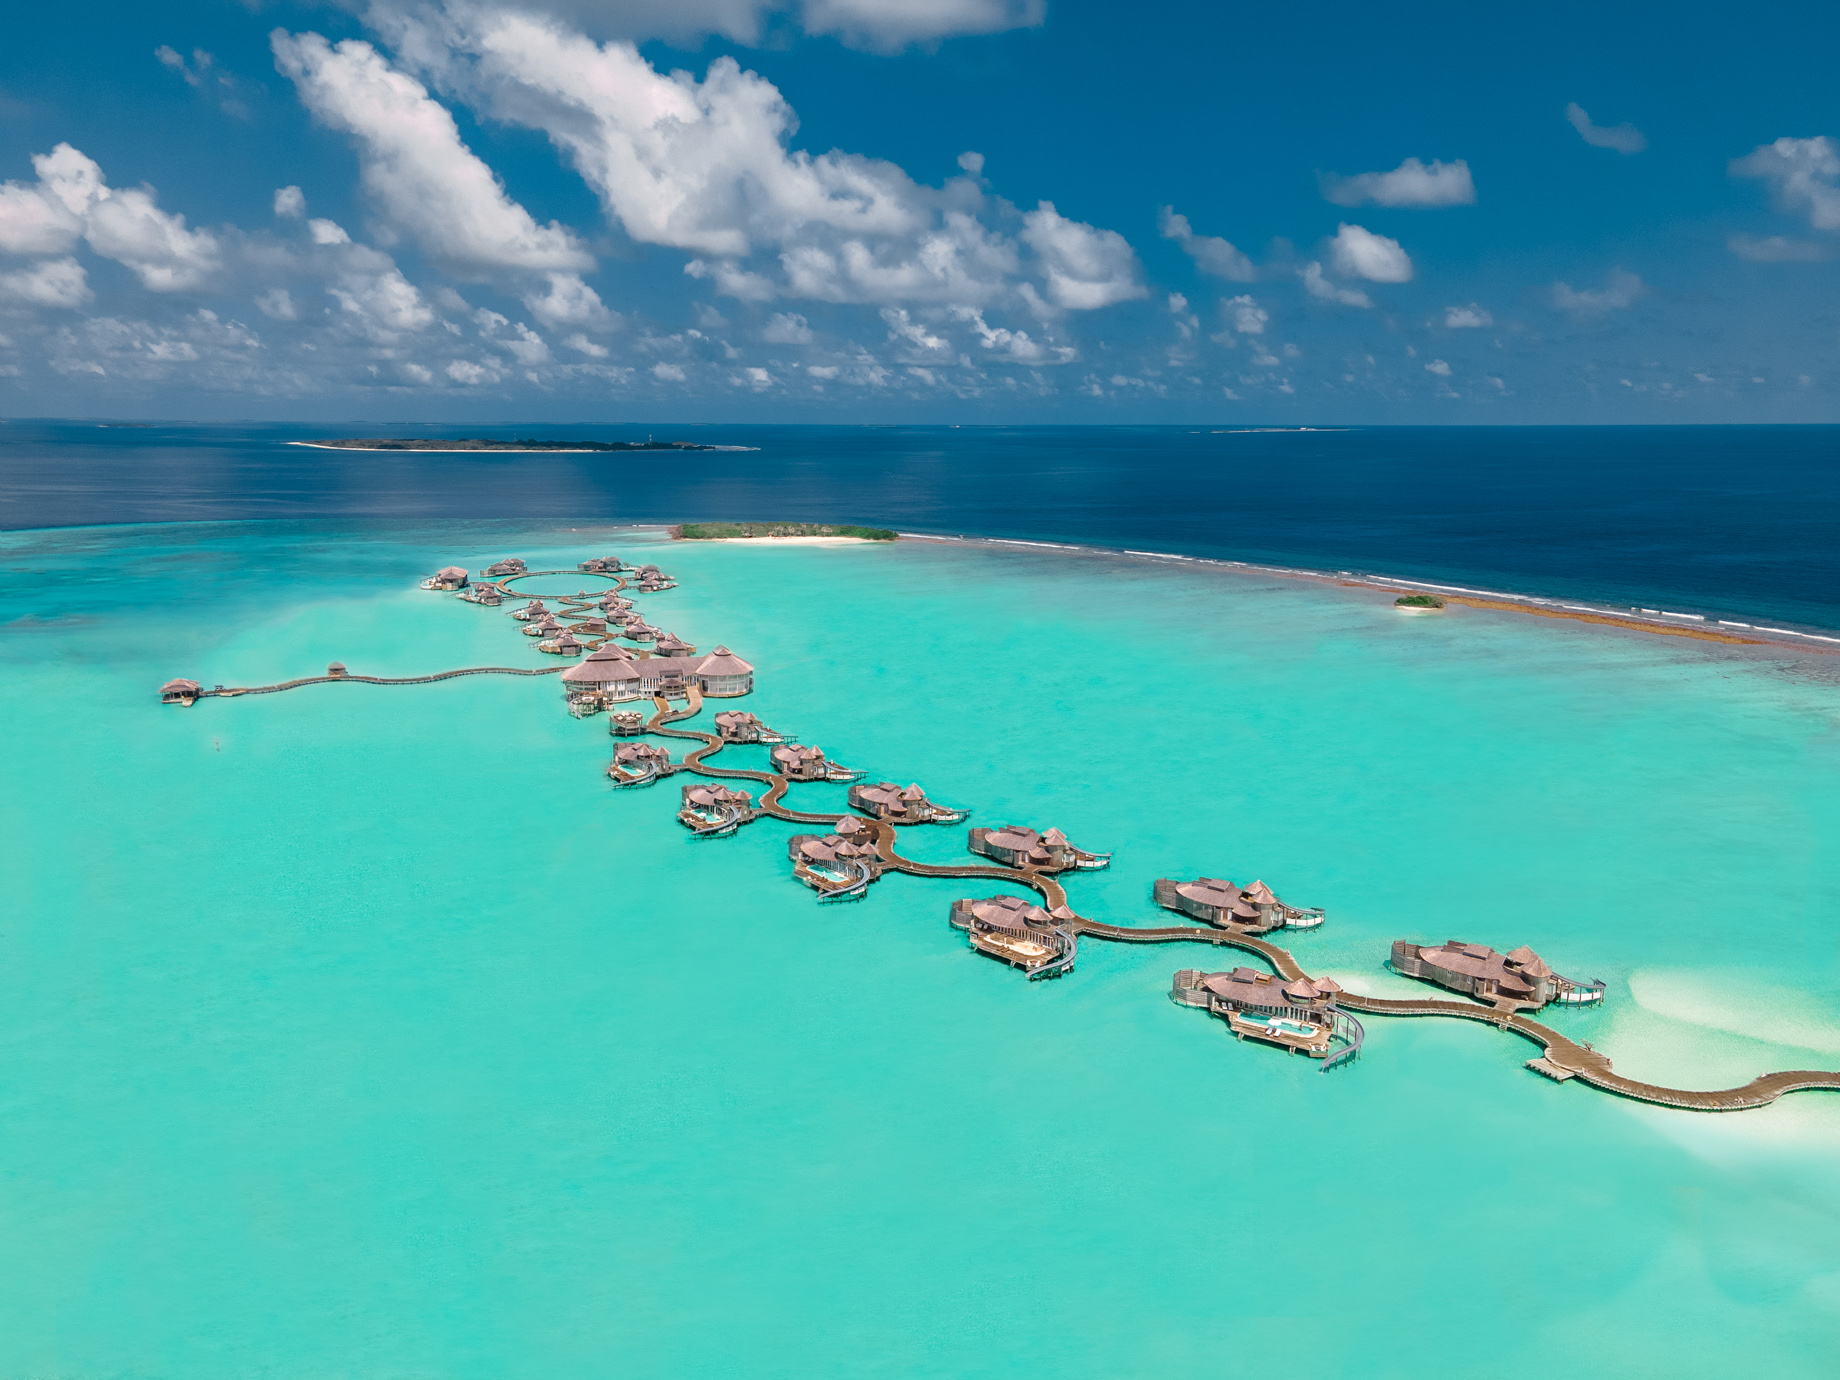 Soneva Jani Resort - Noonu Atoll, Medhufaru, Maldives - Aerial